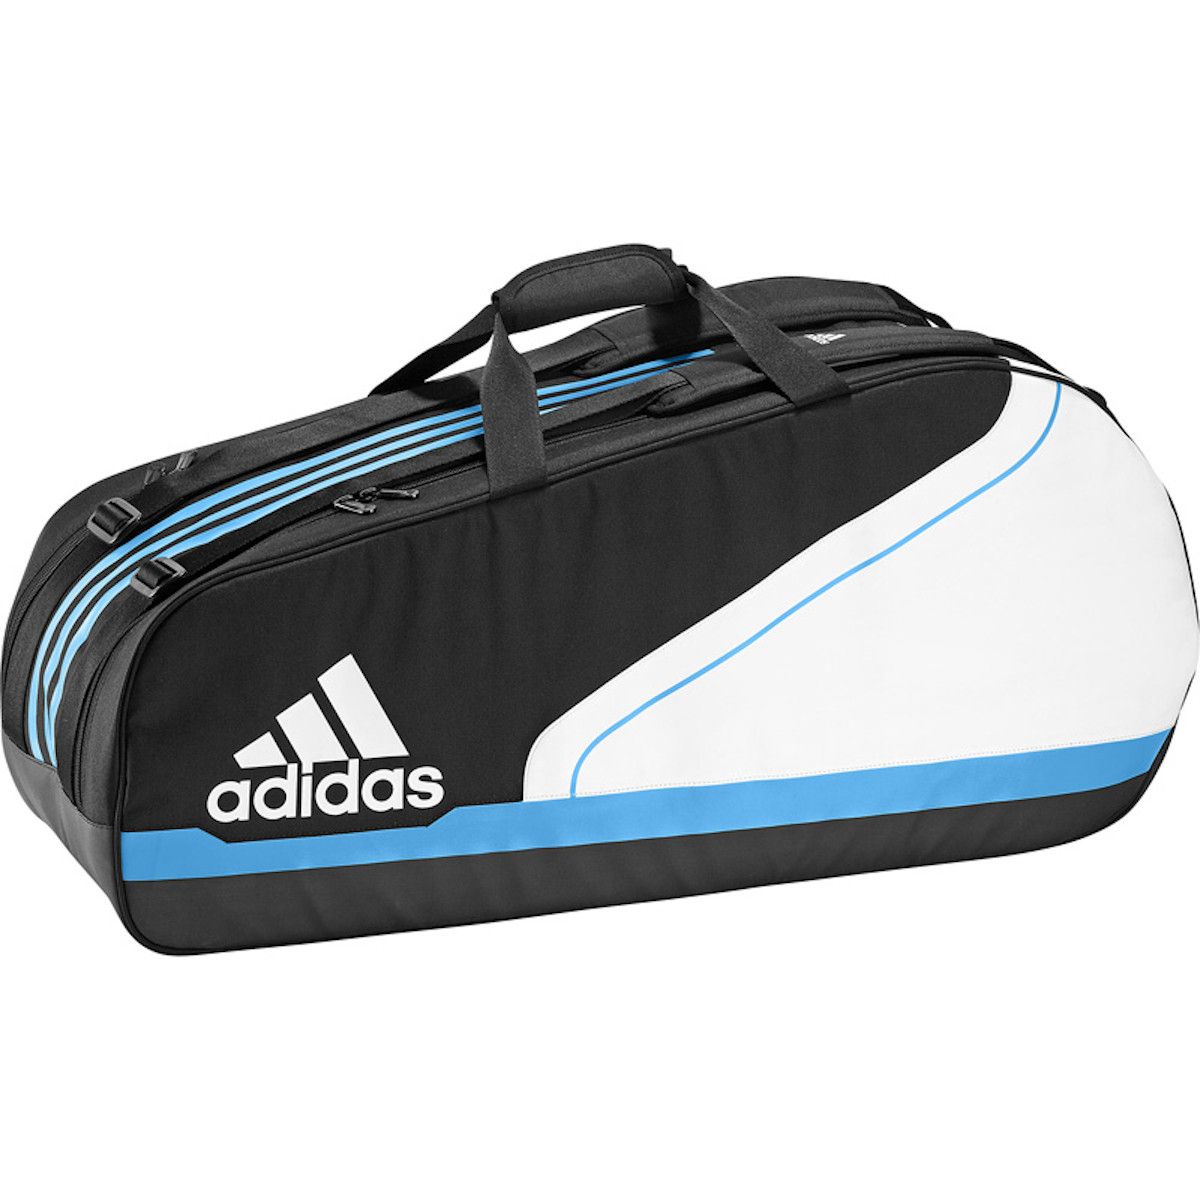 adidas Medium Tennis Racquet Bag F78499